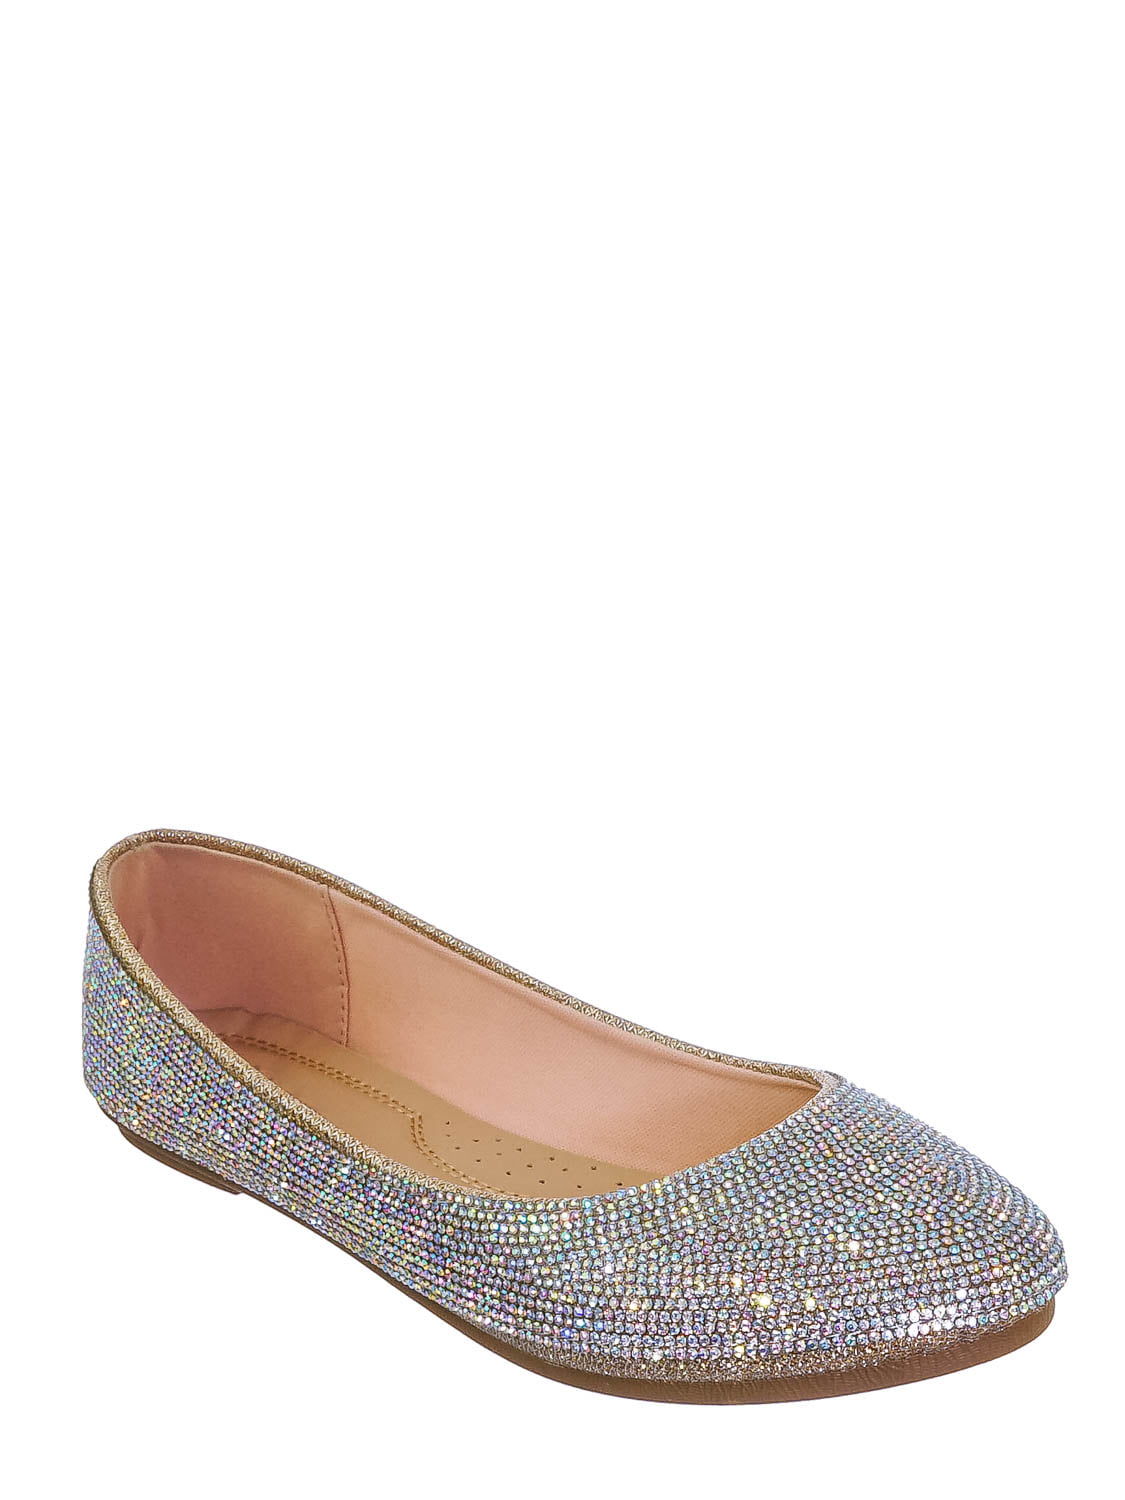 New women basic round toe  jeweled glitter ballet flats  loafer shoes 